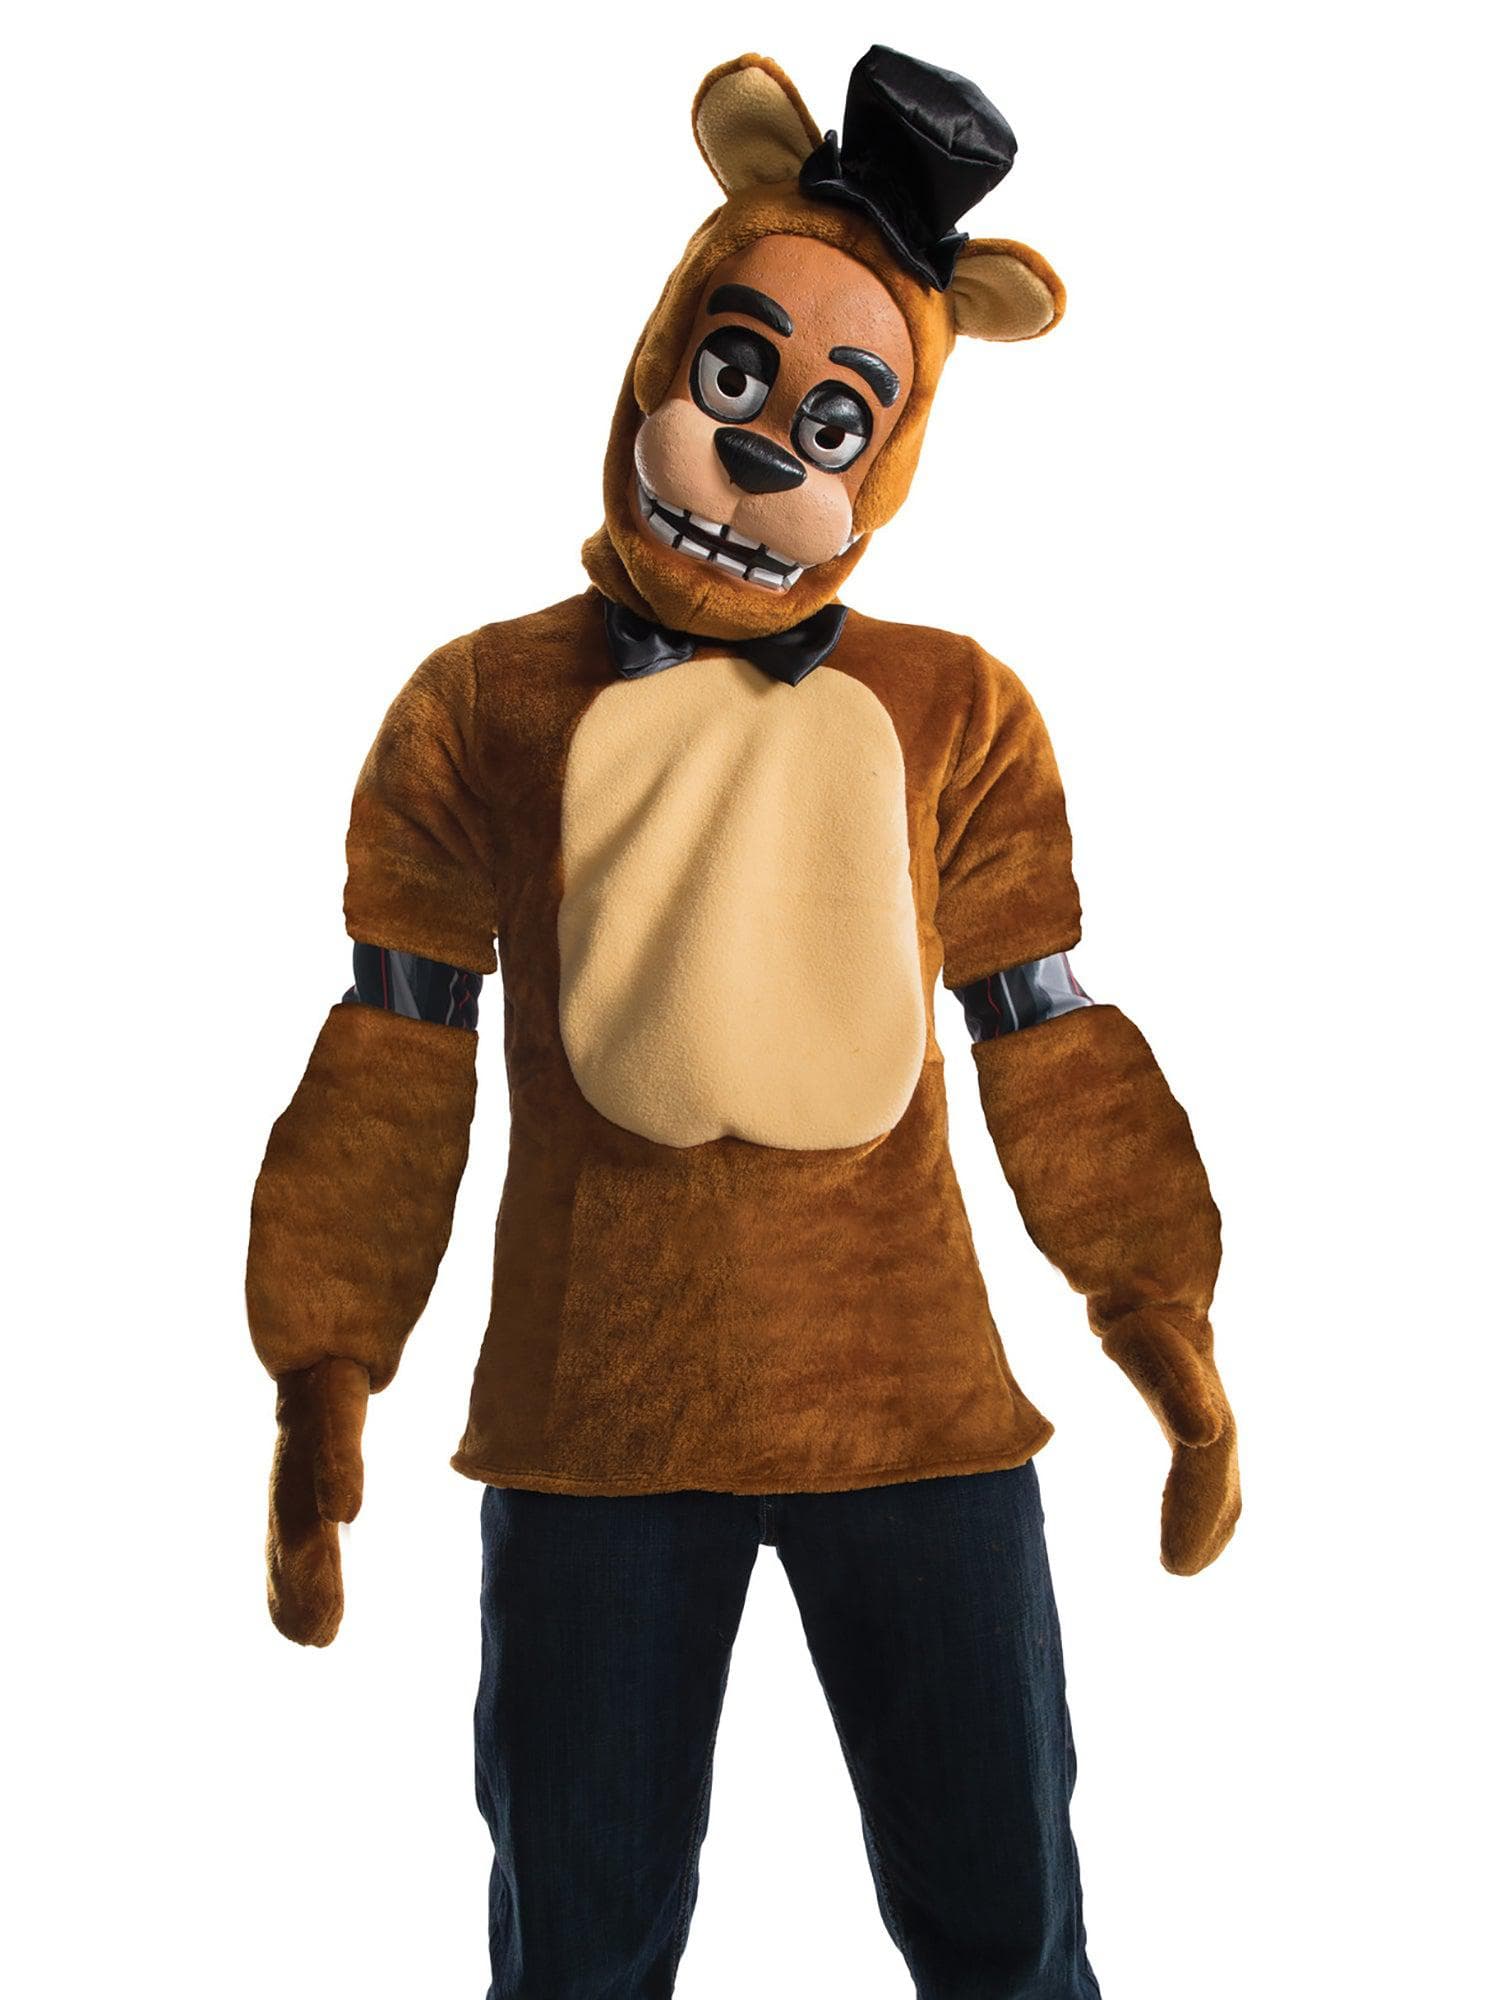 Kids Five Nights At Freddys Freddy Costume - costumes.com